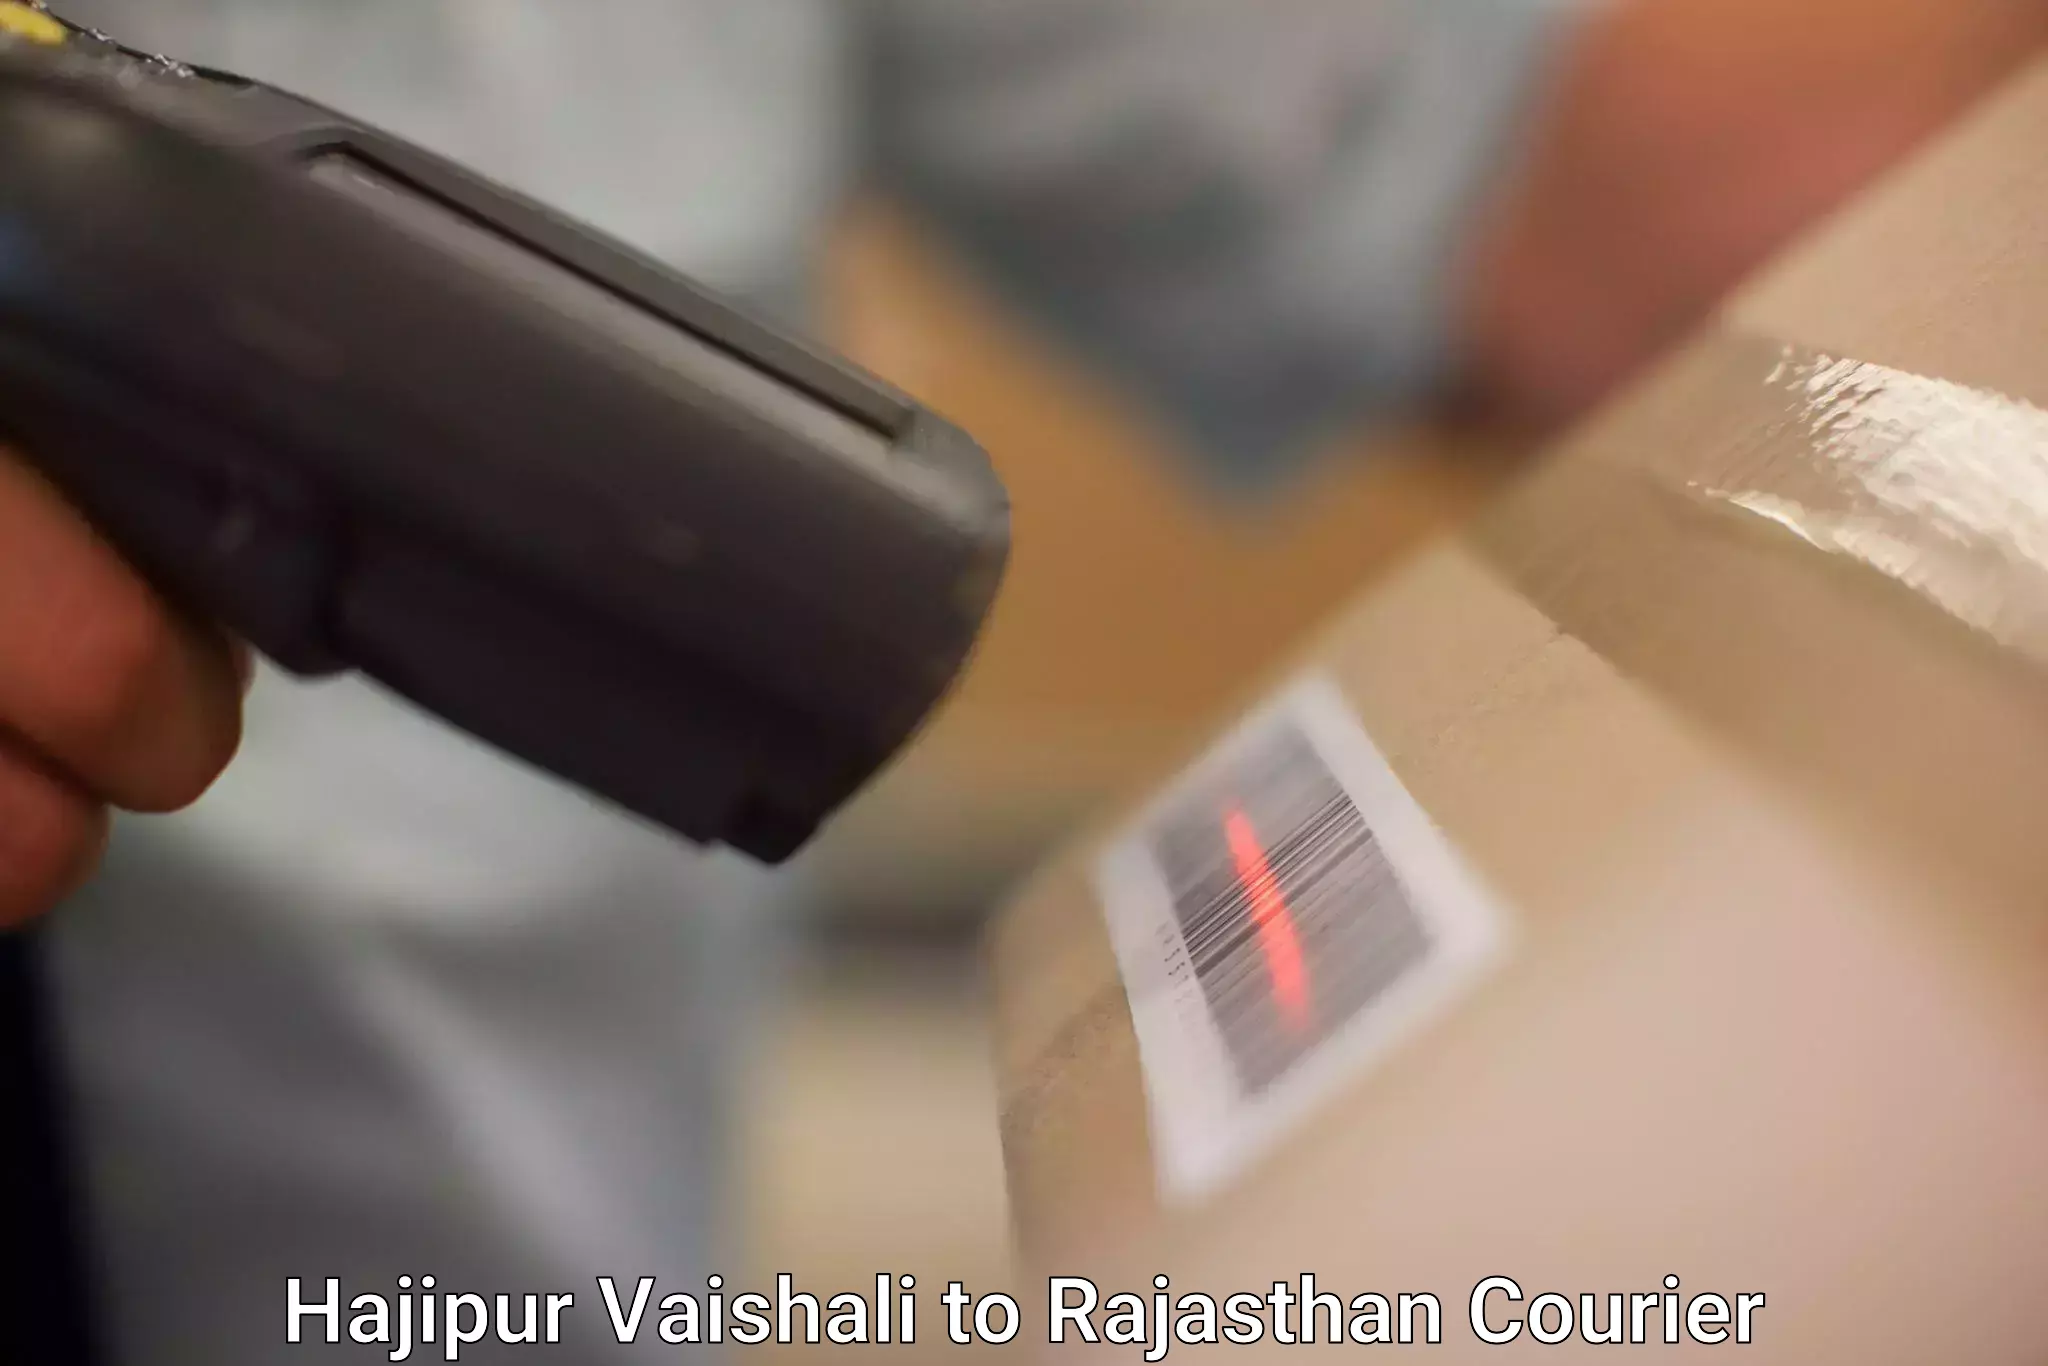 Courier service partnerships Hajipur Vaishali to Sujangarh